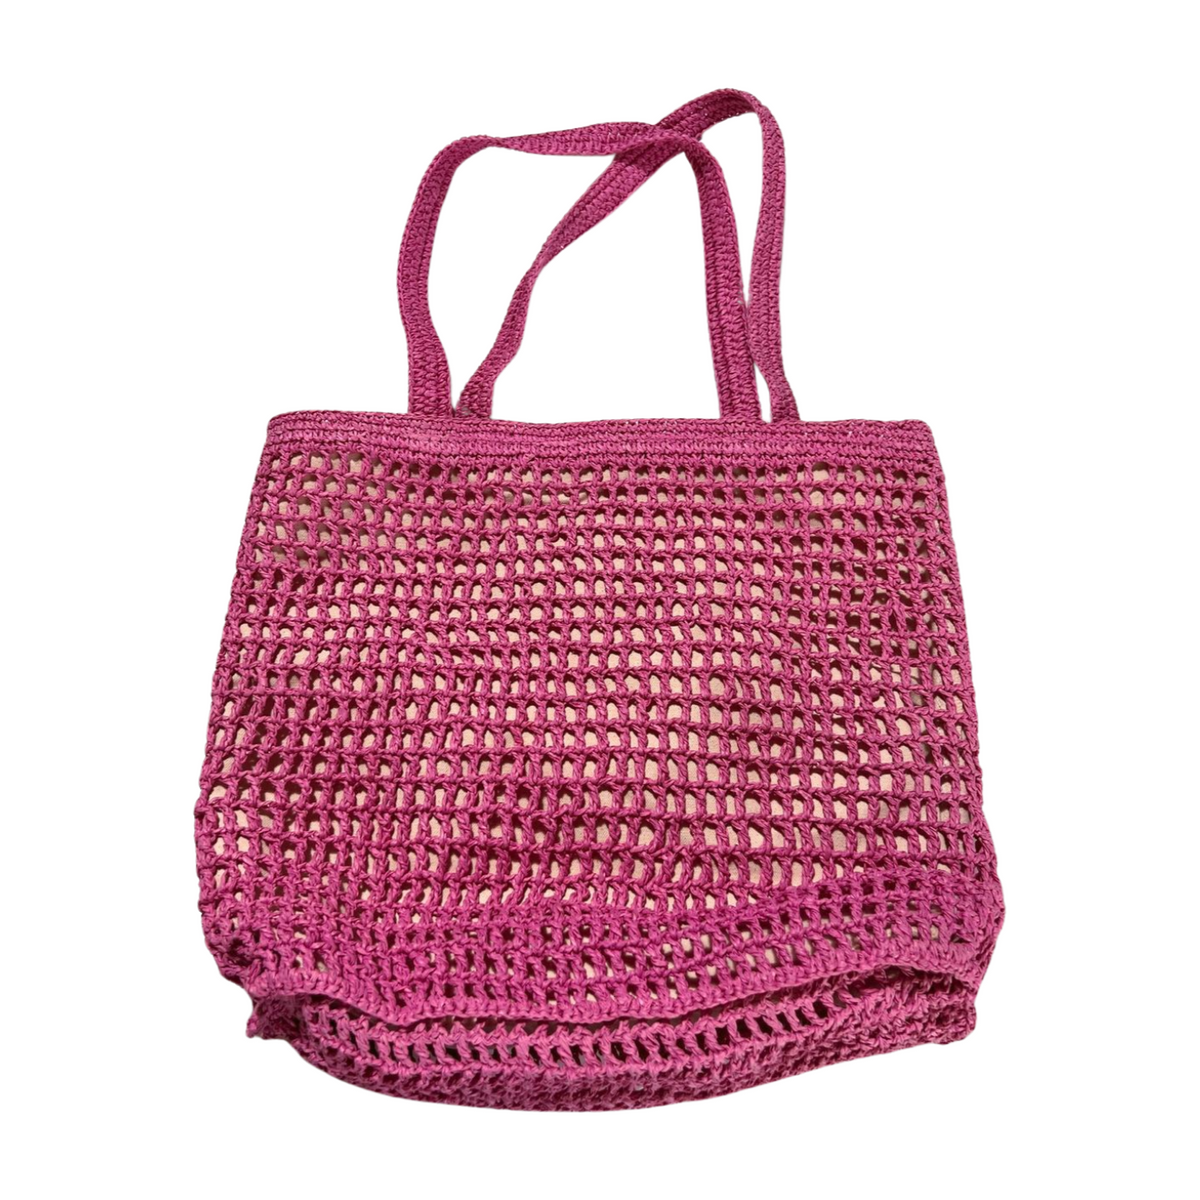 Madewell- Pink Ratan Beach Bag NEW WITH TAGS!